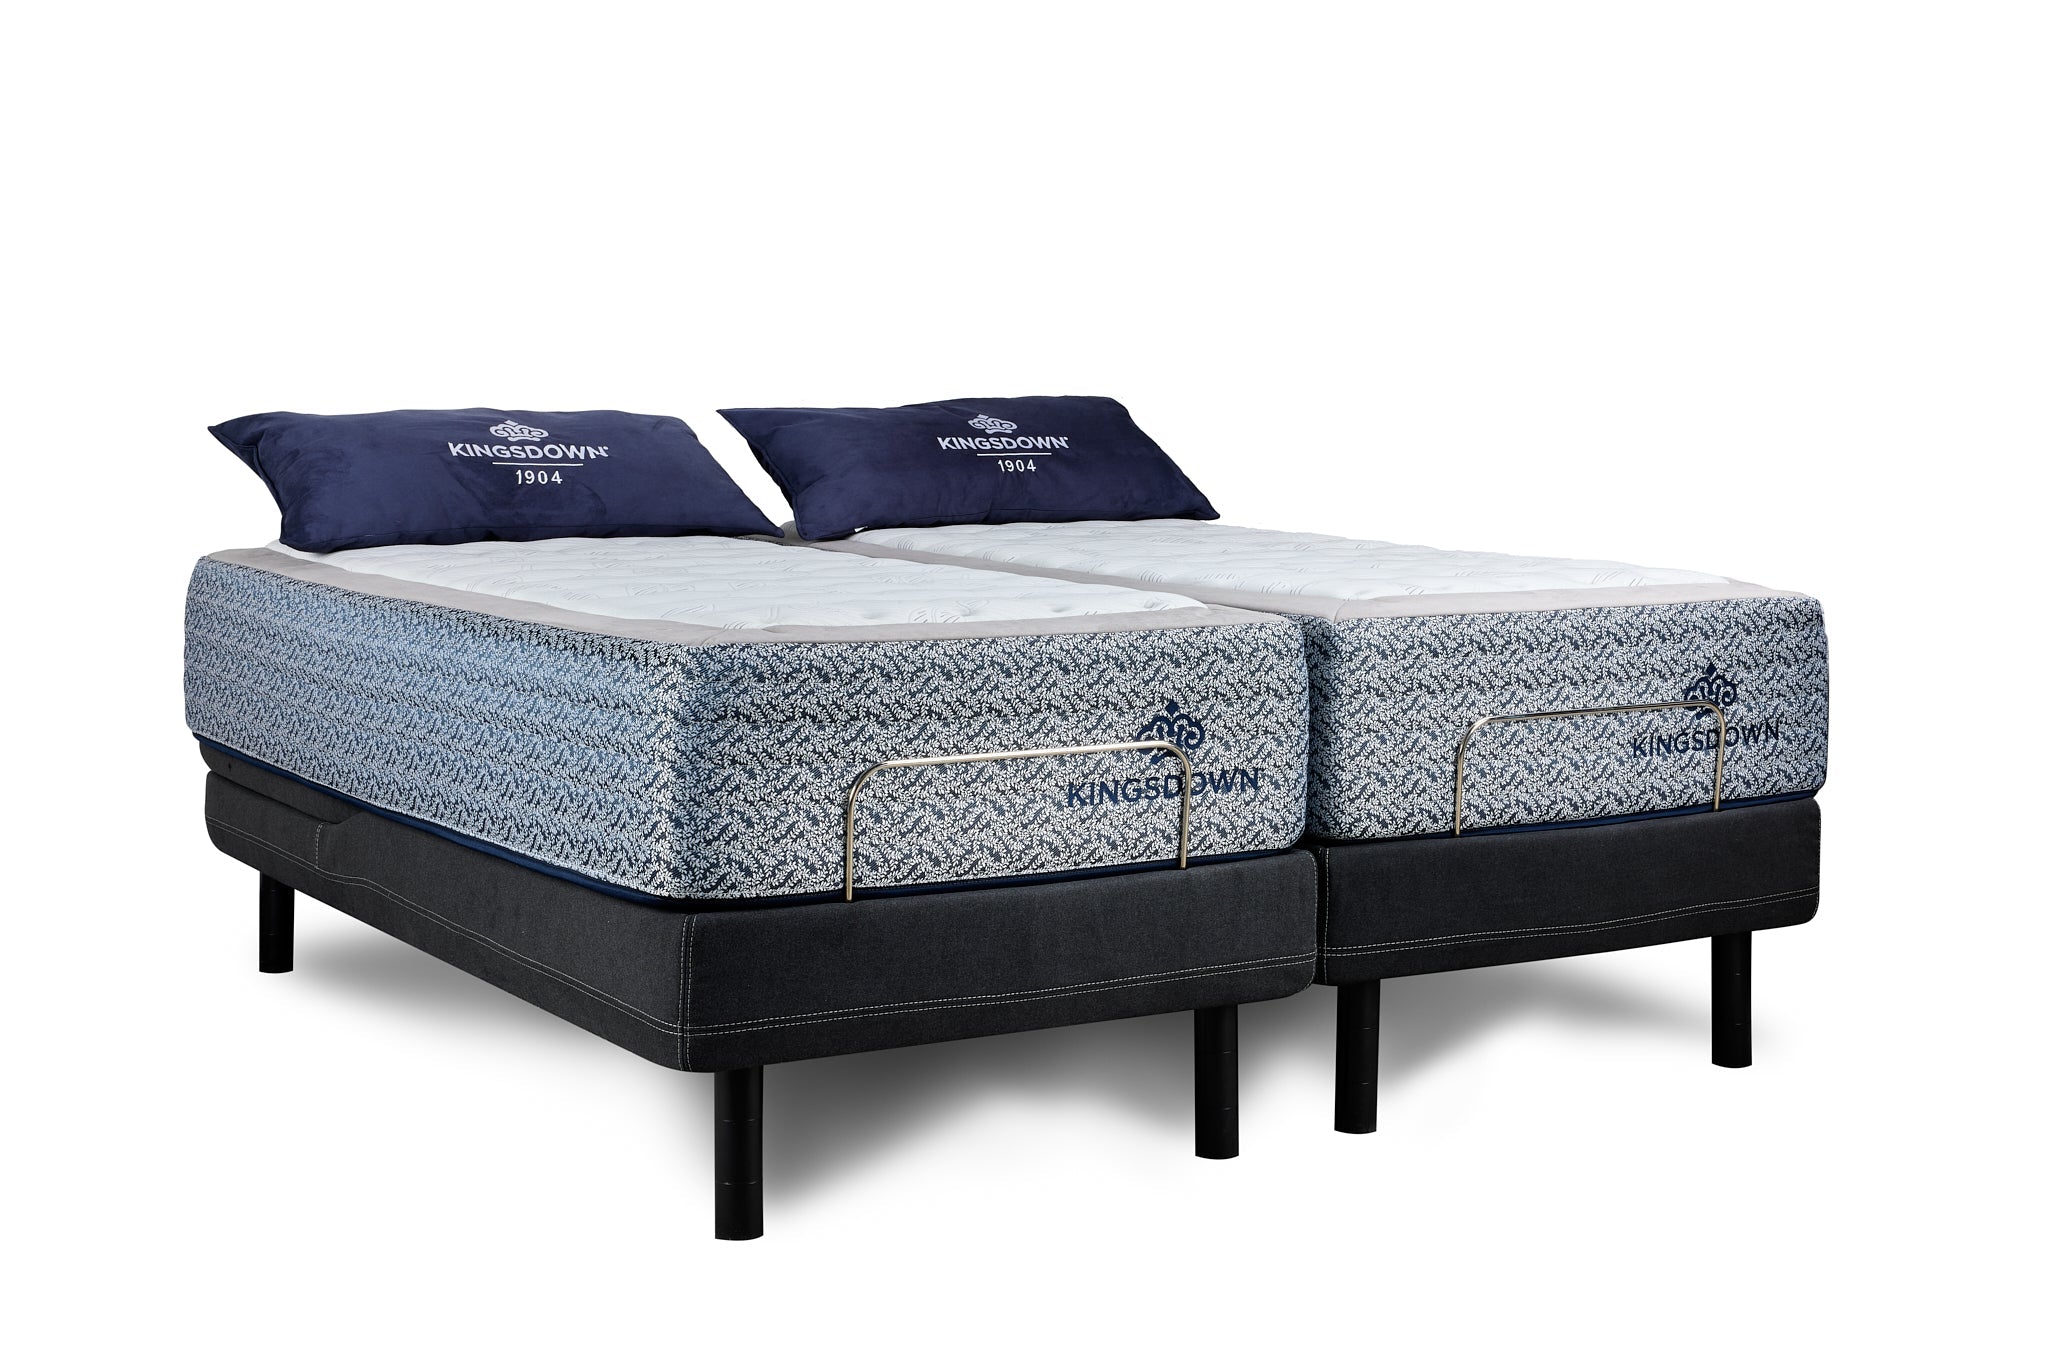 Demo Kaitlan Royale Split King Adjustable Bed